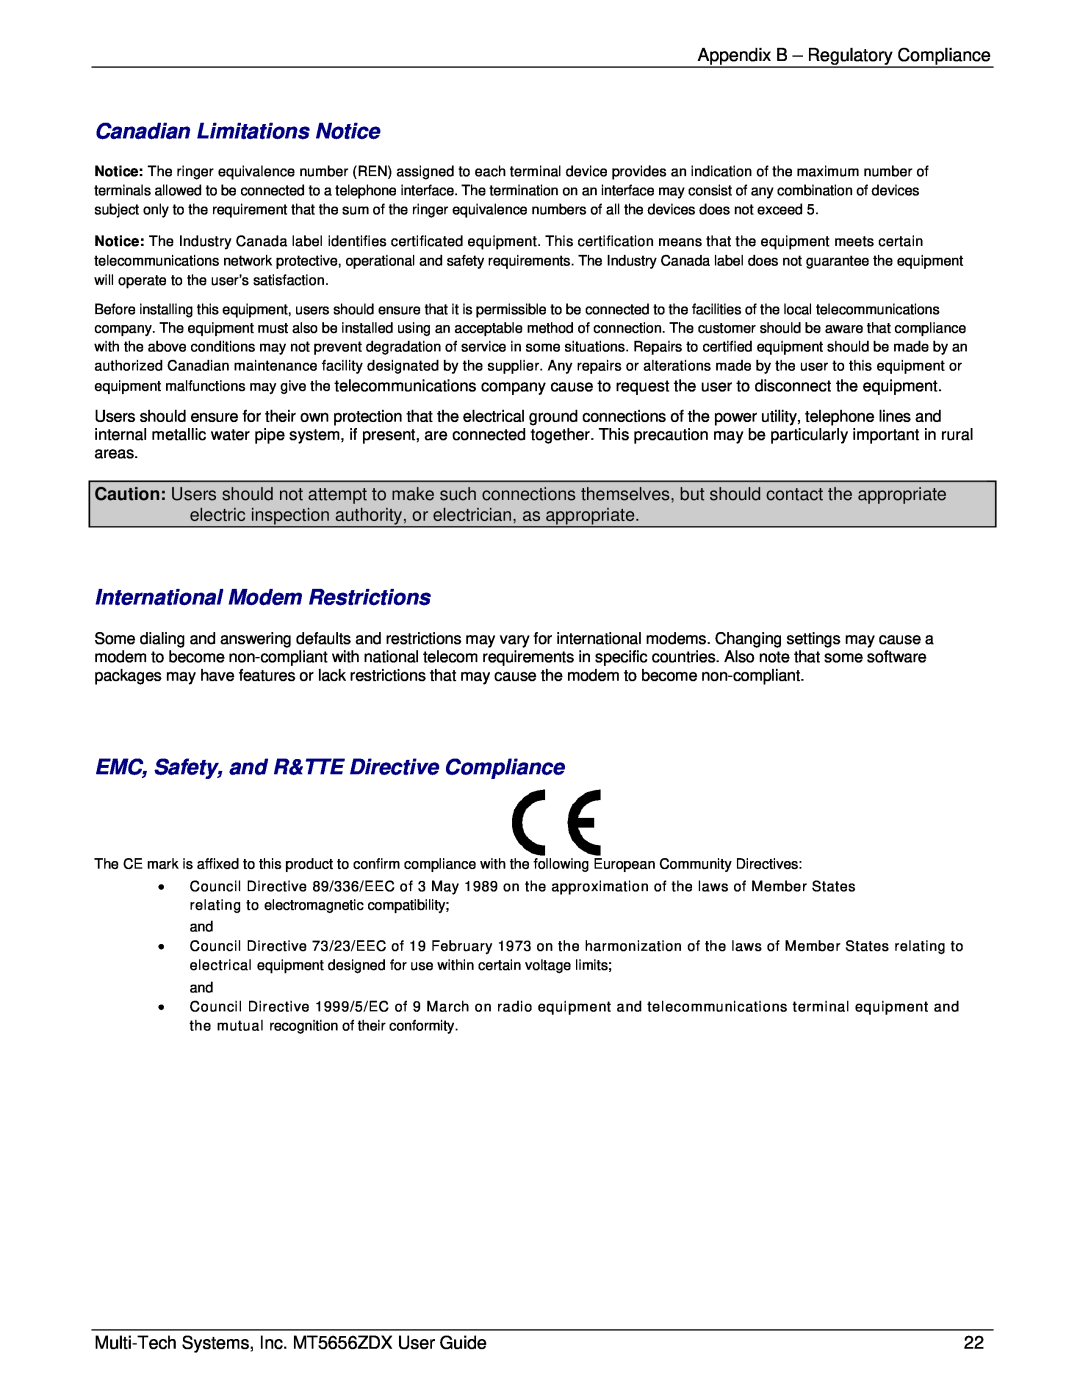 Multi Tech Equipment MT5656ZDX manual Canadian Limitations Notice, International Modem Restrictions 